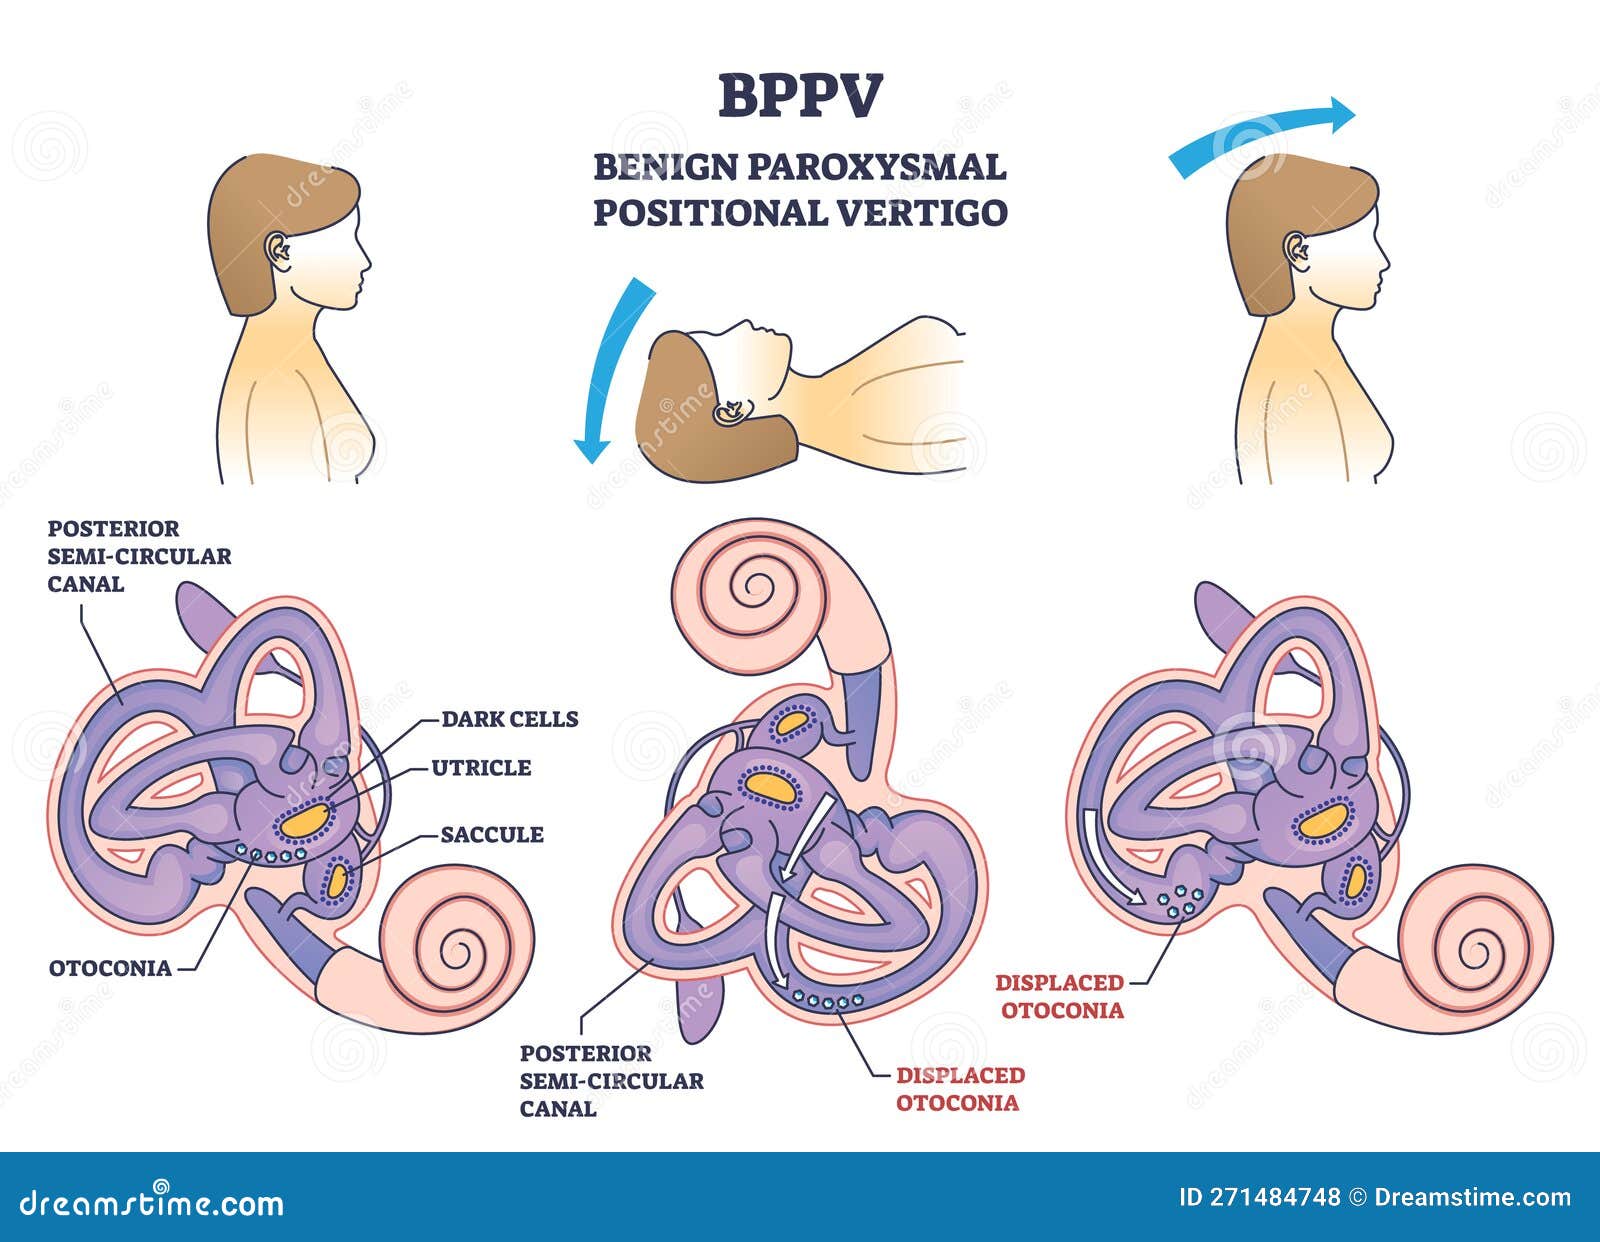 bppv or benign paroxysmal positional vertigo syndrome outline diagram